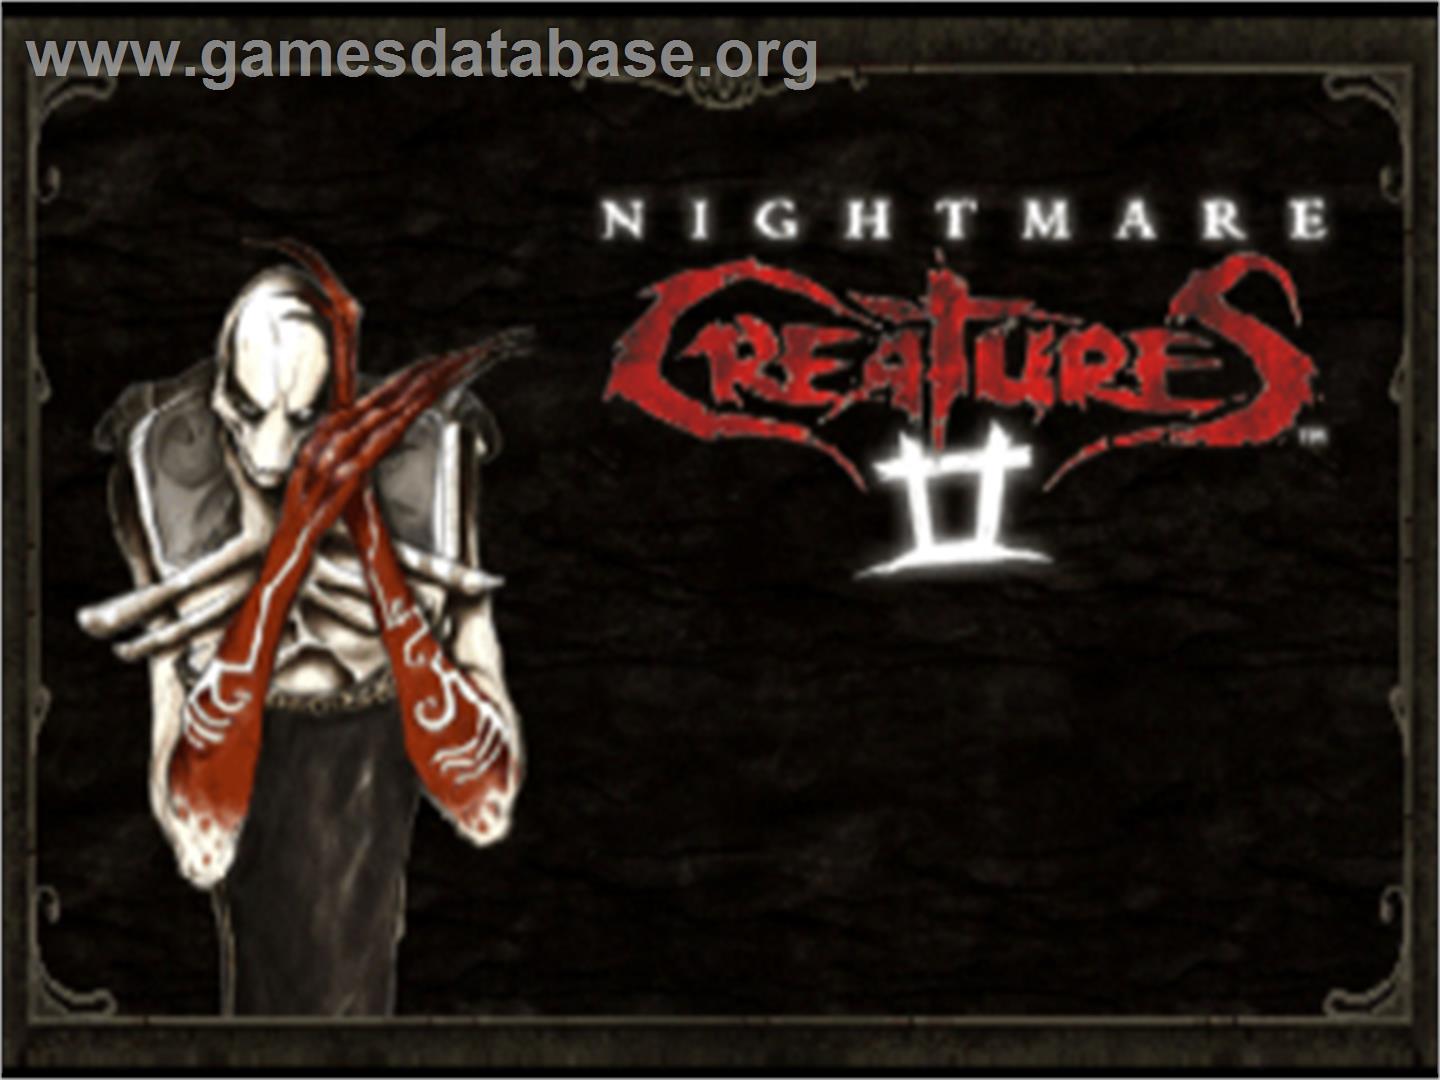 Nightmare Creatures II - Sony Playstation - Artwork - Title Screen